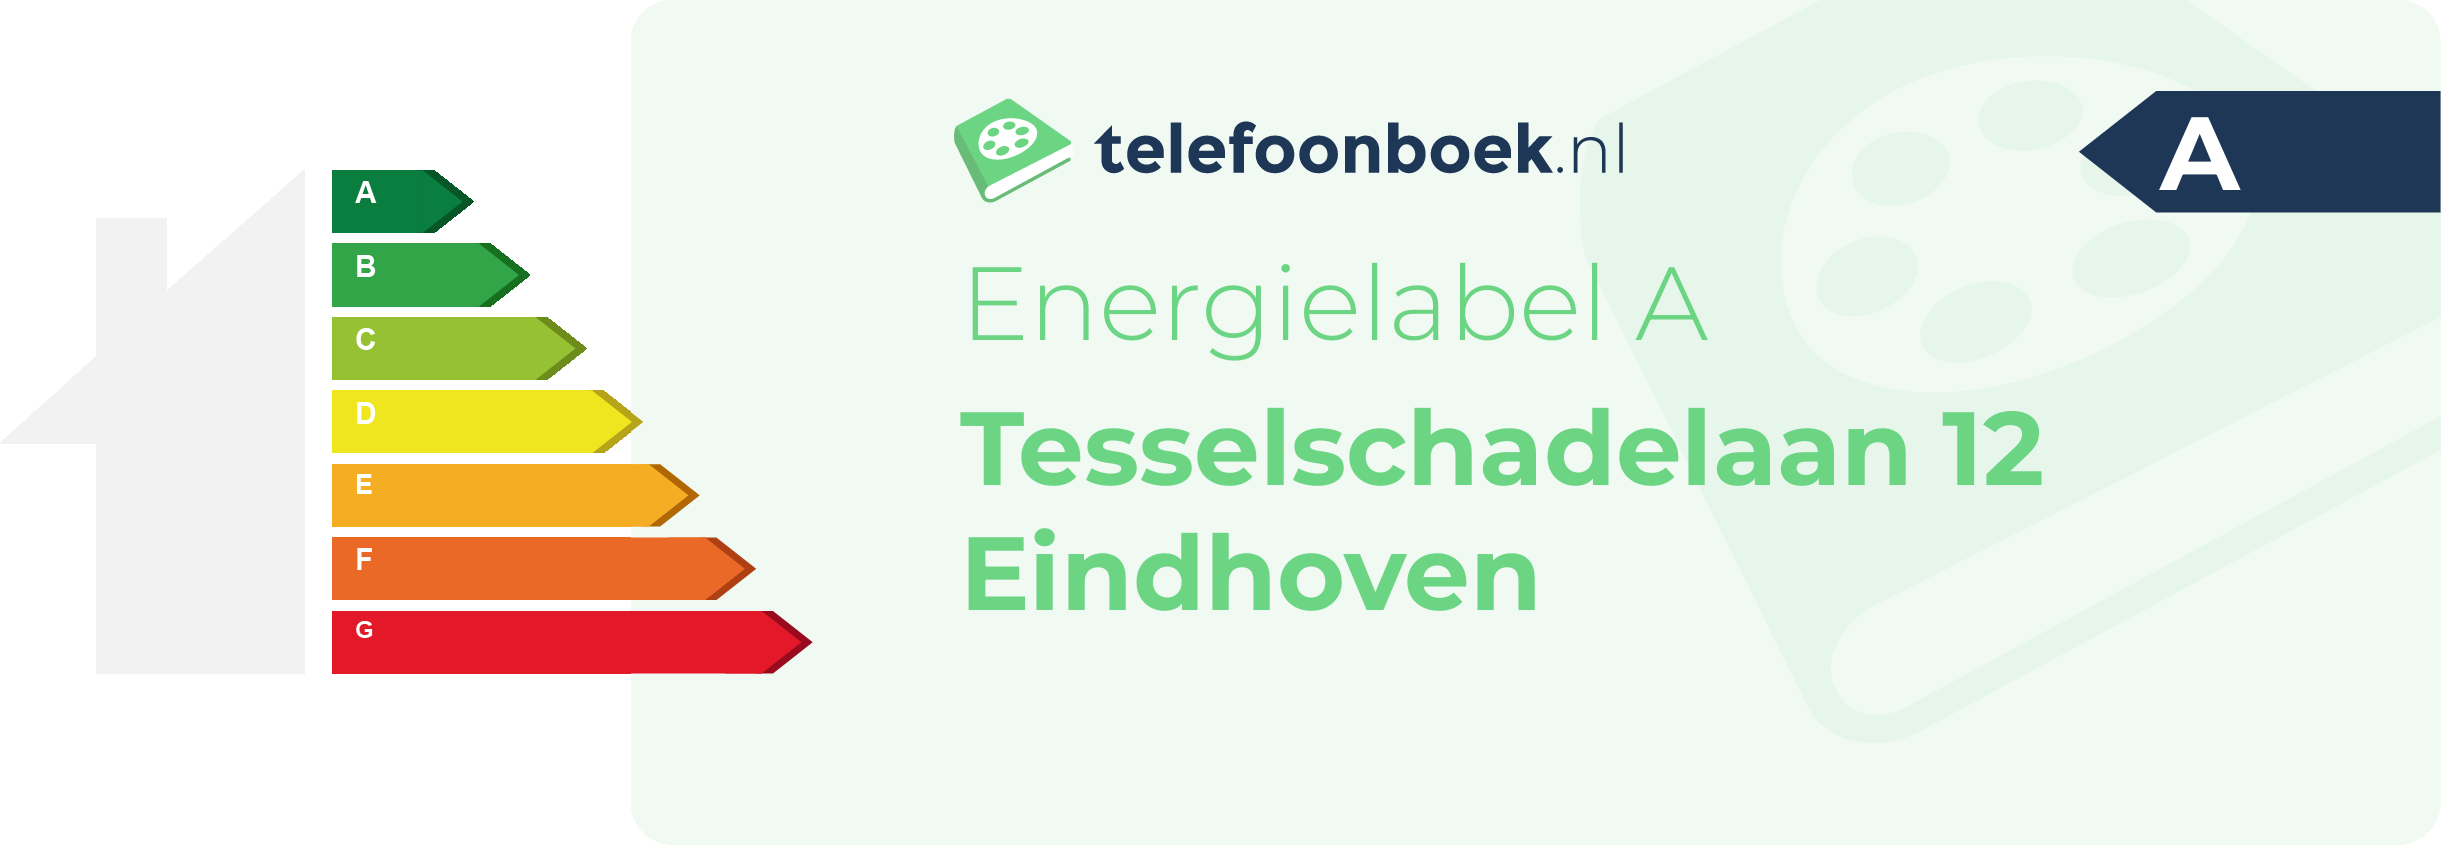 Energielabel Tesselschadelaan 12 Eindhoven